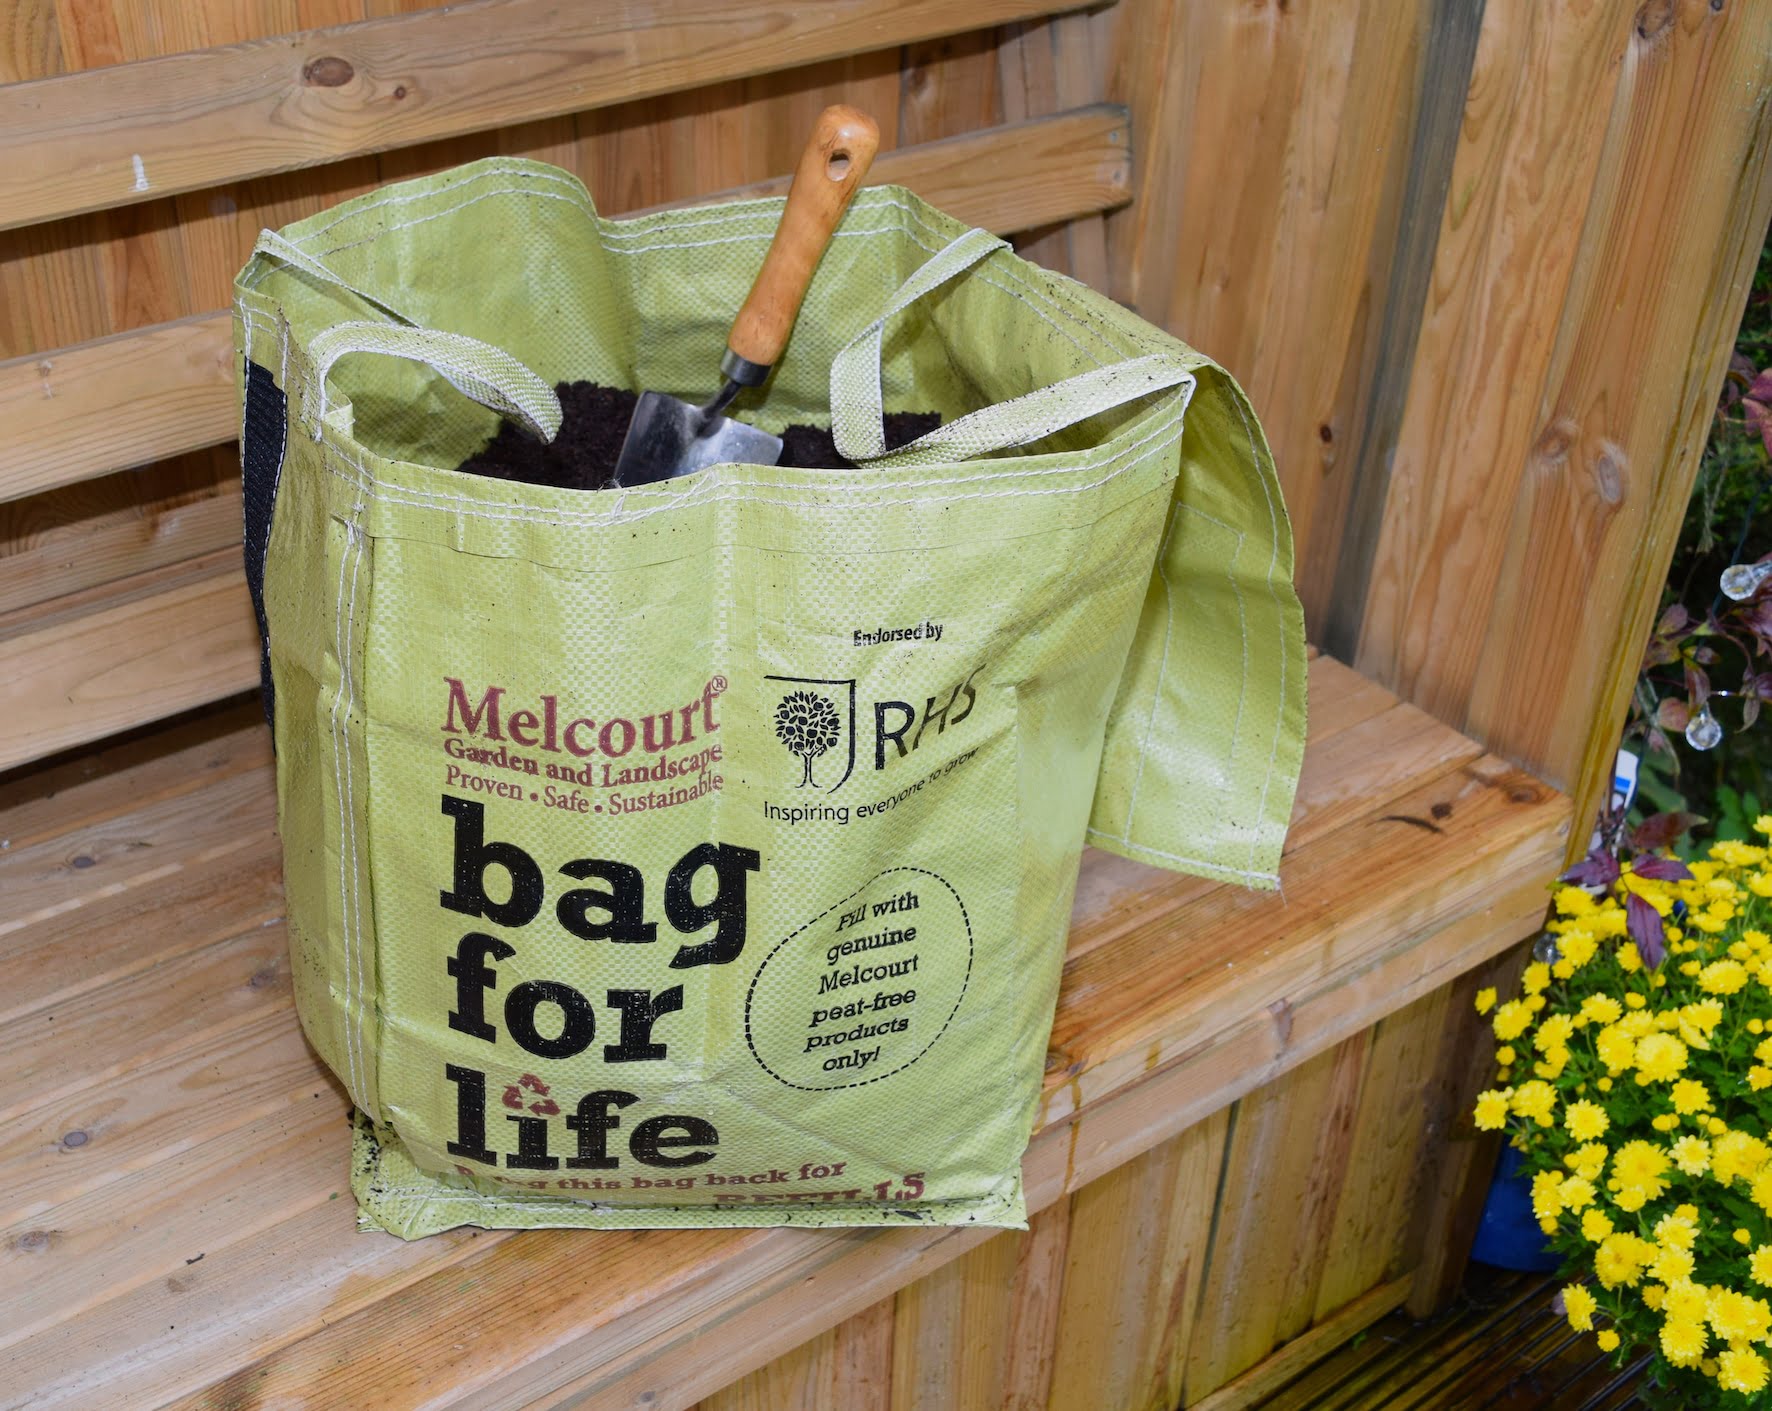 Melcourt bag for life